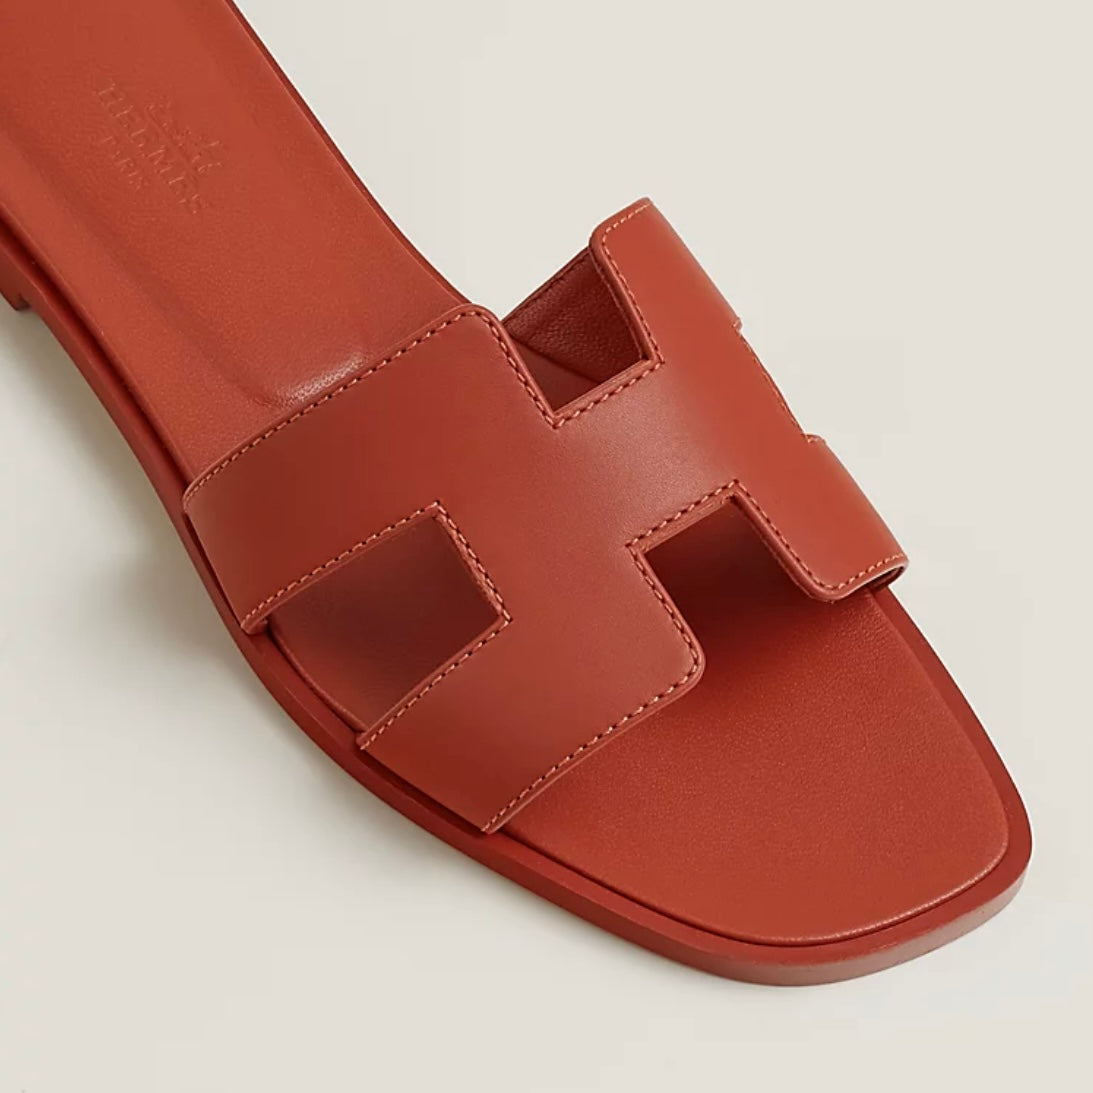 Hong Kong Stock - Hermes Oran Sandal (rouge de turin/Size 37.5)